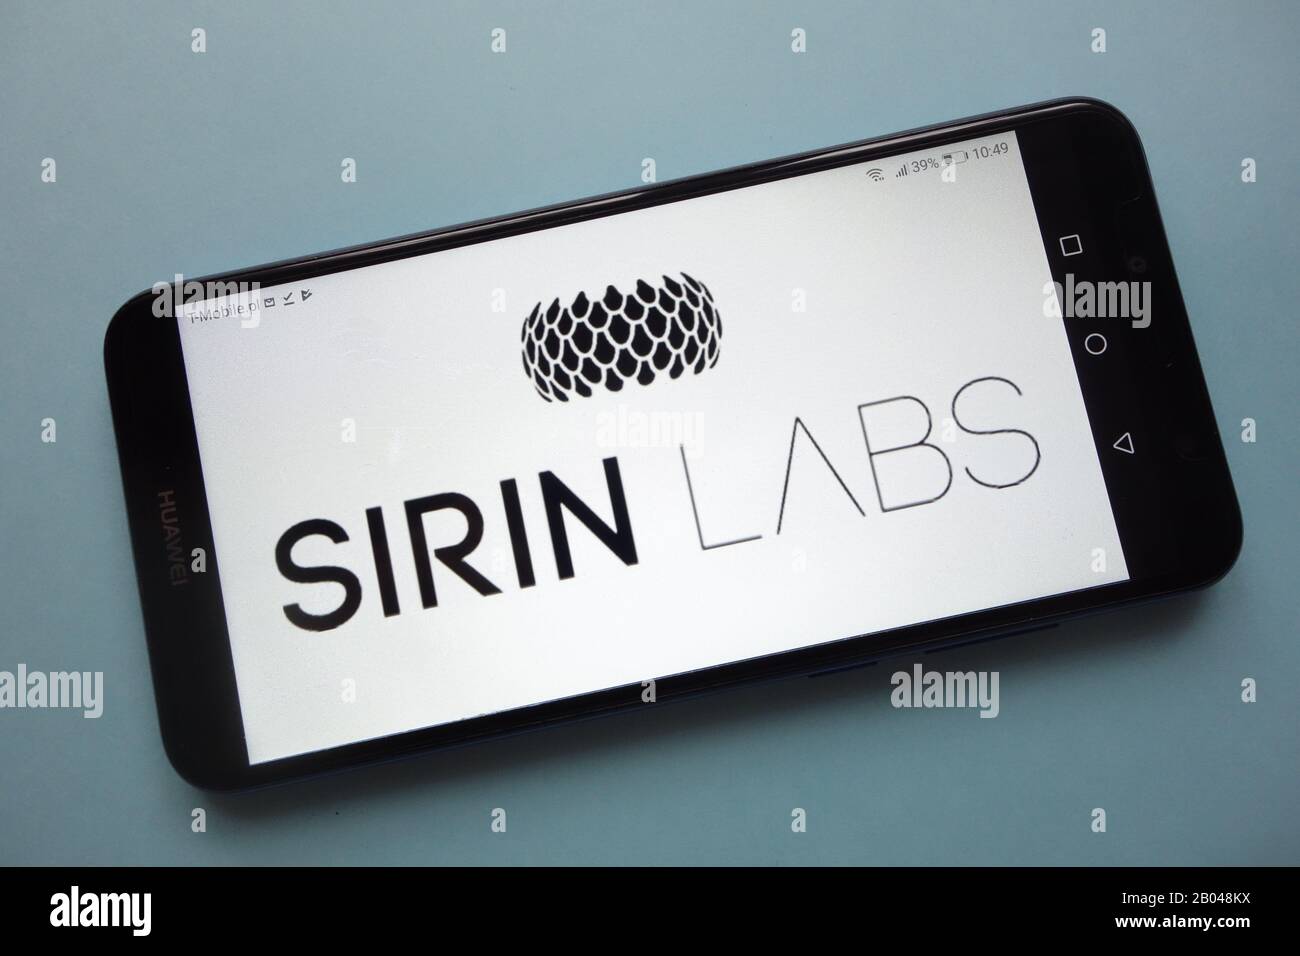 SIRIN LABS Token (SRN) cryptocurrency logo displayed on smartphone Stock Photo